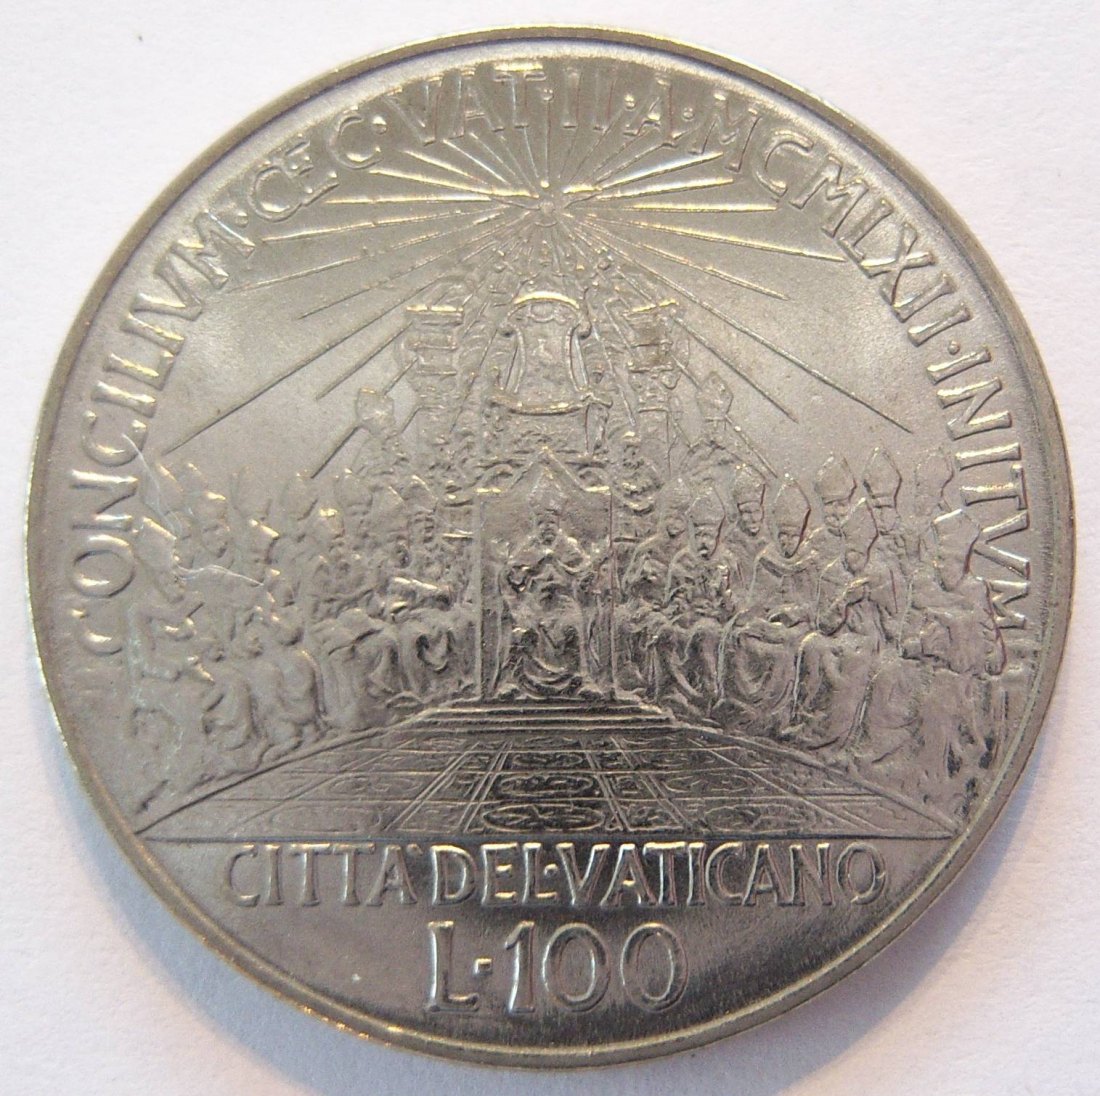  Vatikan 100 Lire 1962   